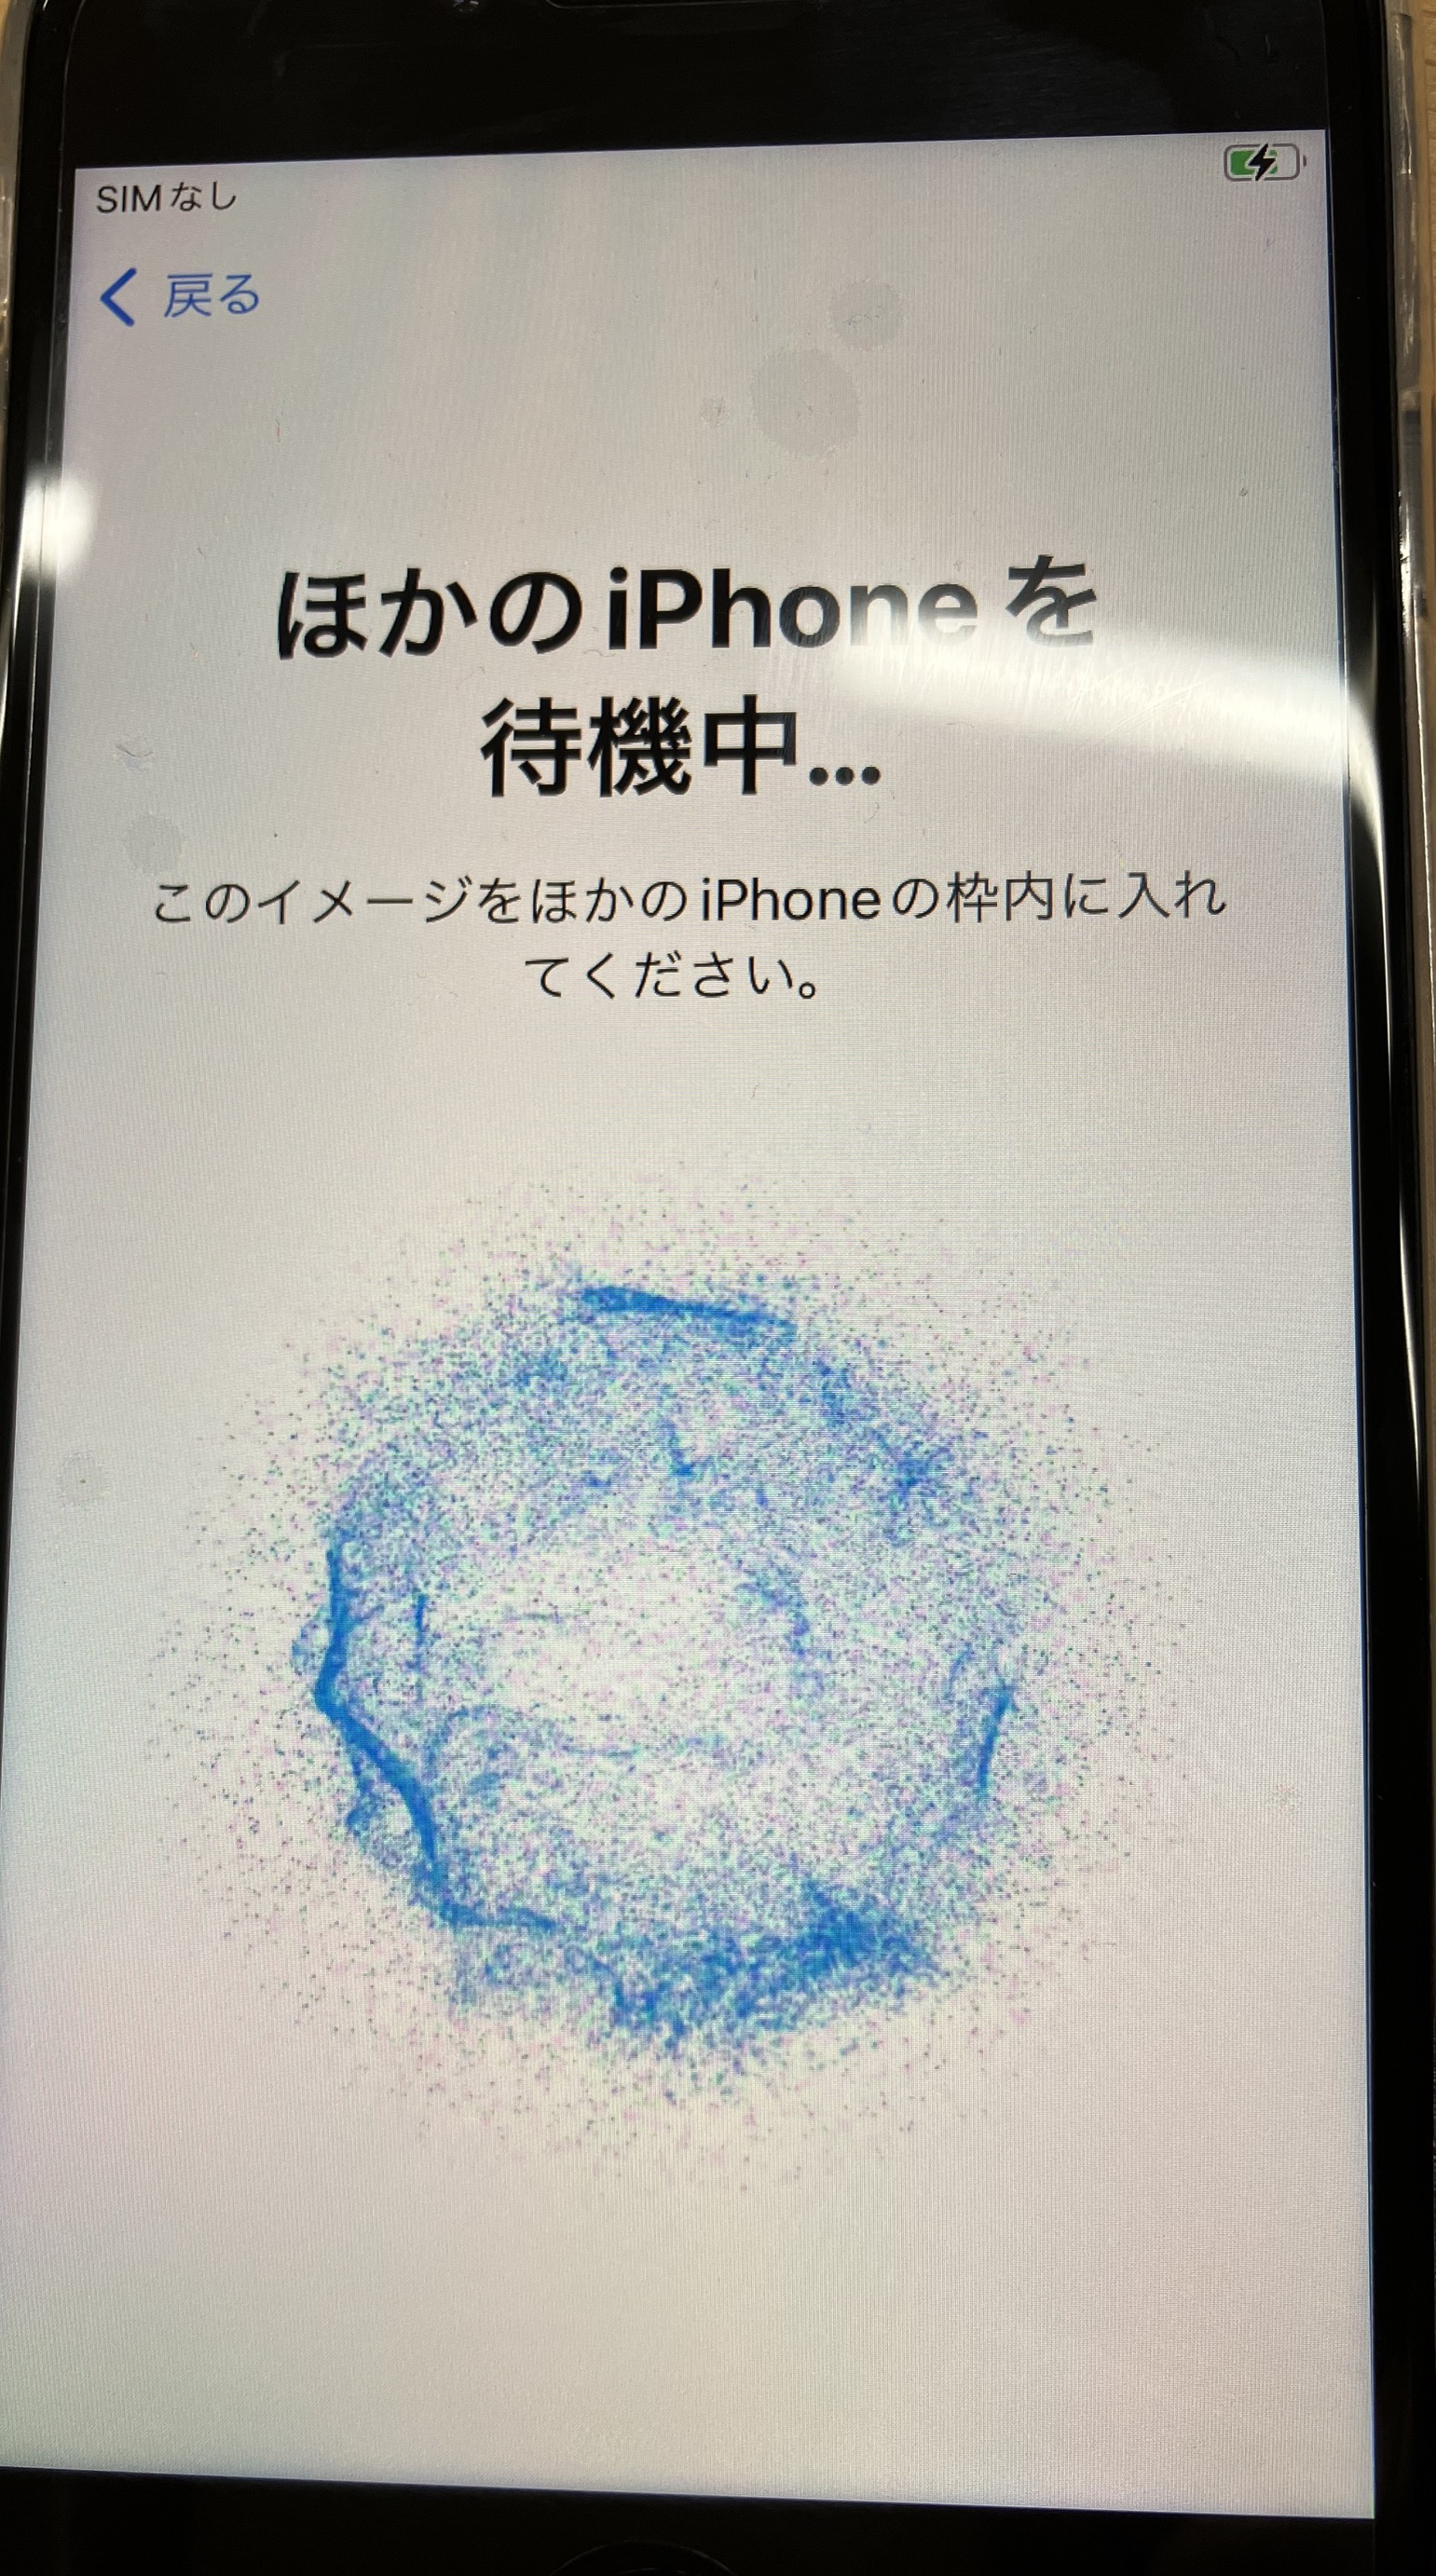 iPhone:新しいiPhoneで「ほかのiPhoneを待機中」と表示され、青い円状のアニメーションが表示される